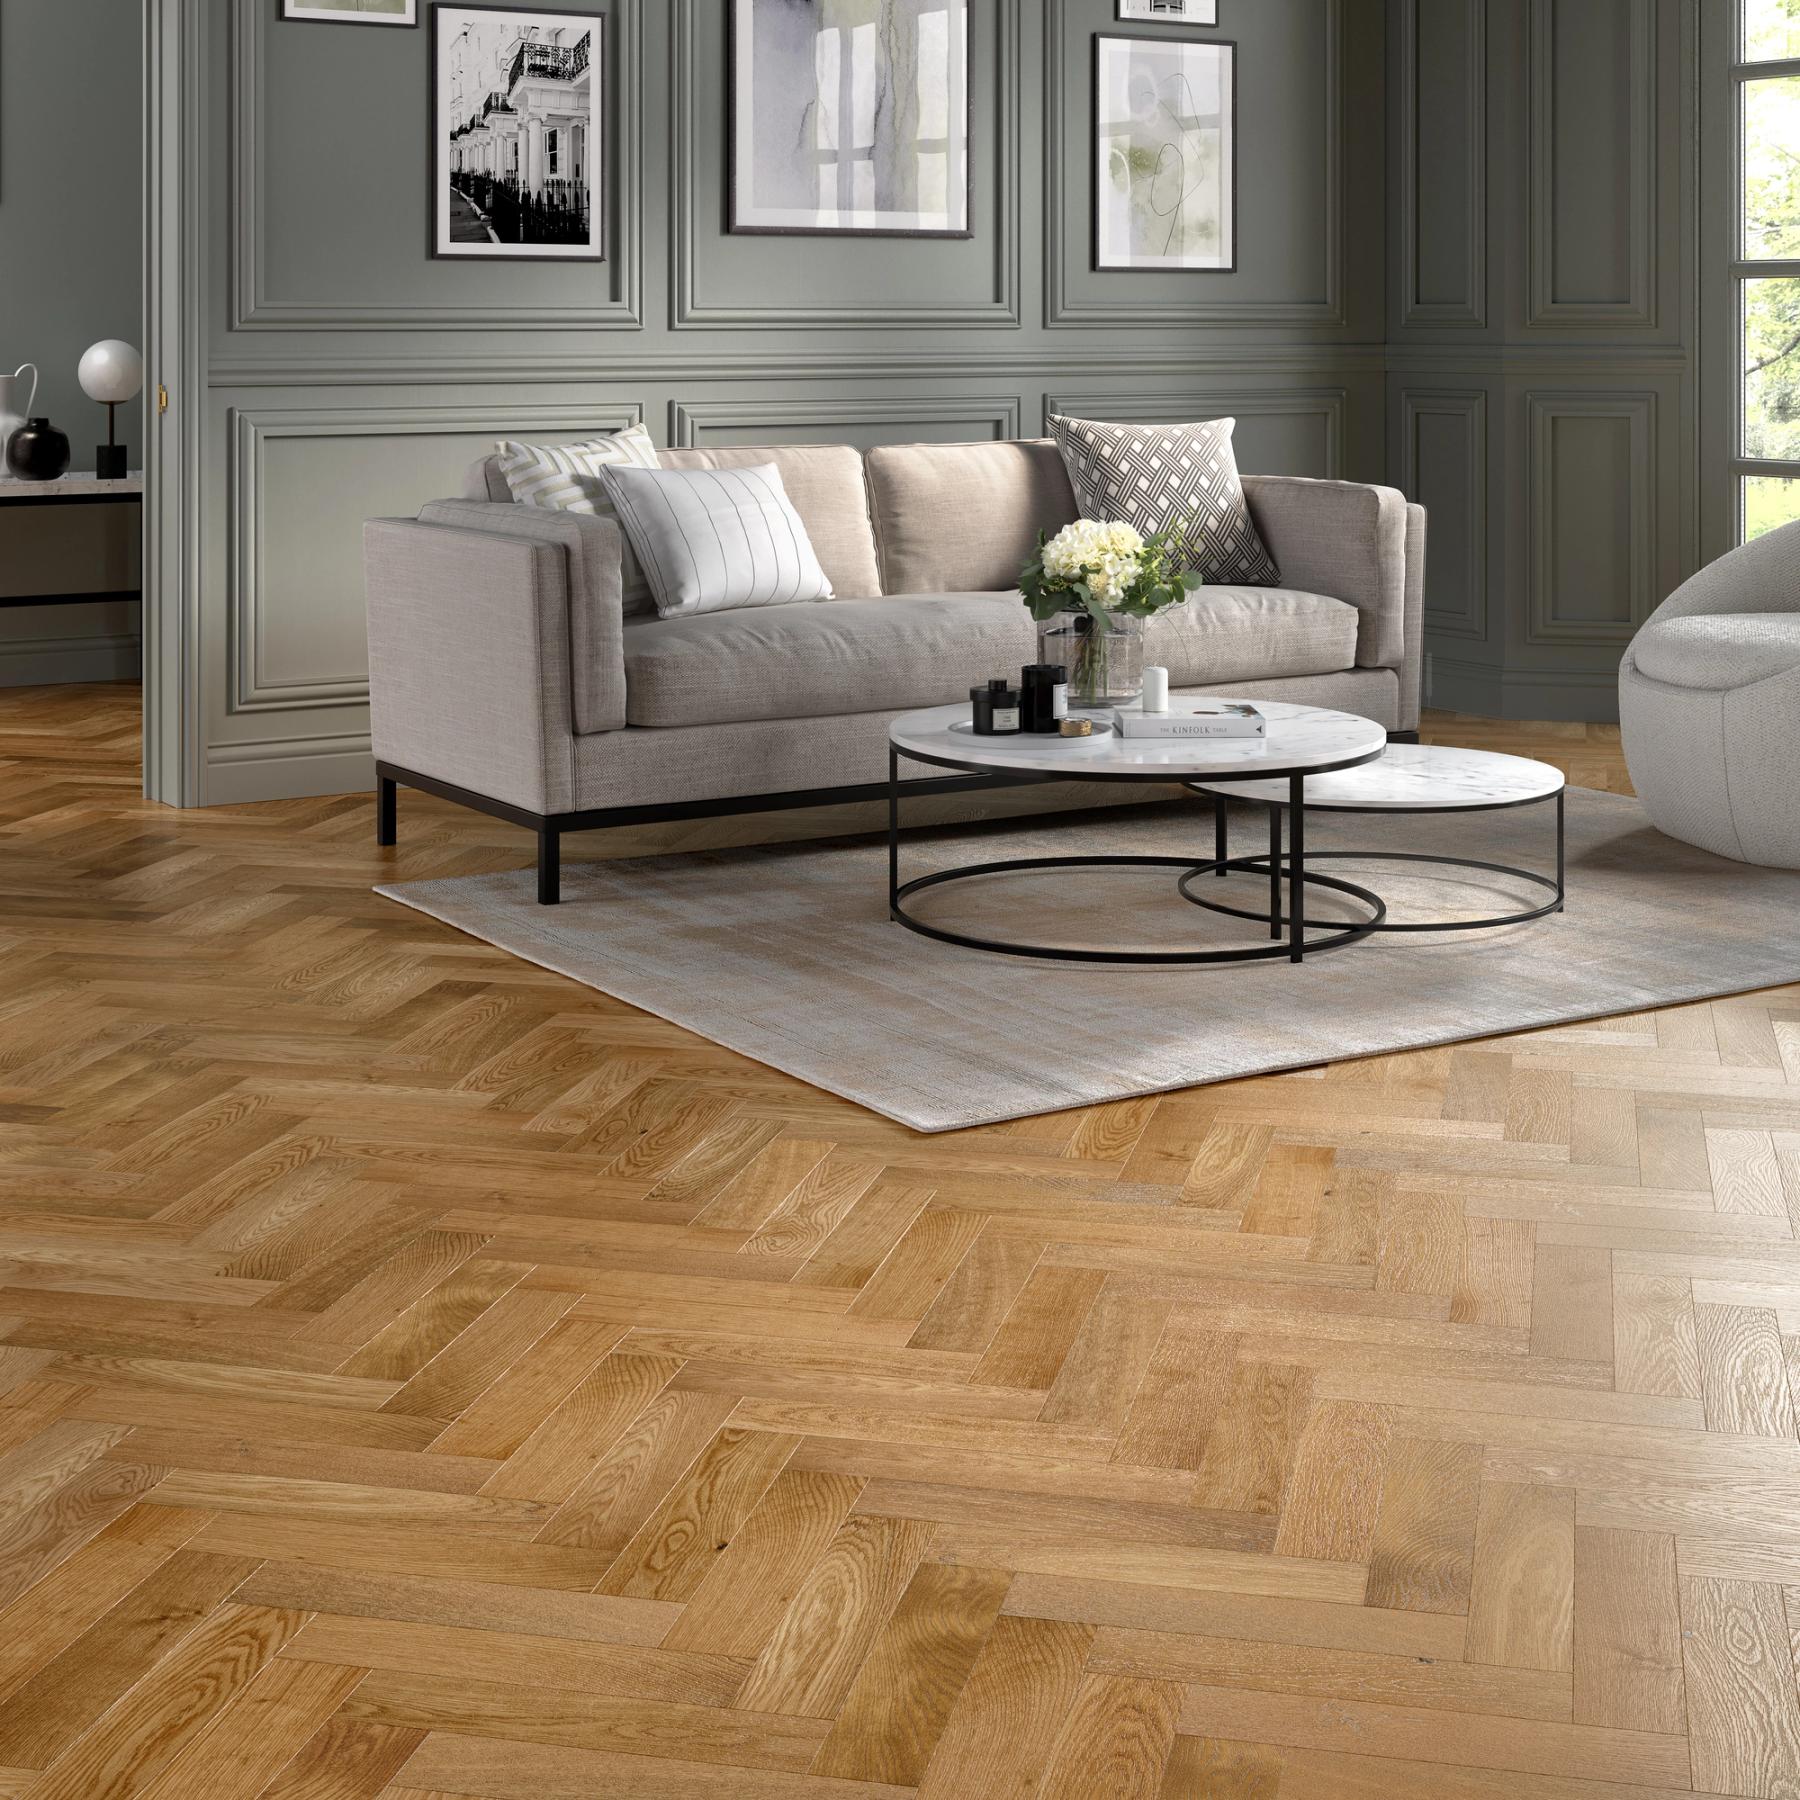 CGI render of chevron patterned oak wood flooring in a living room